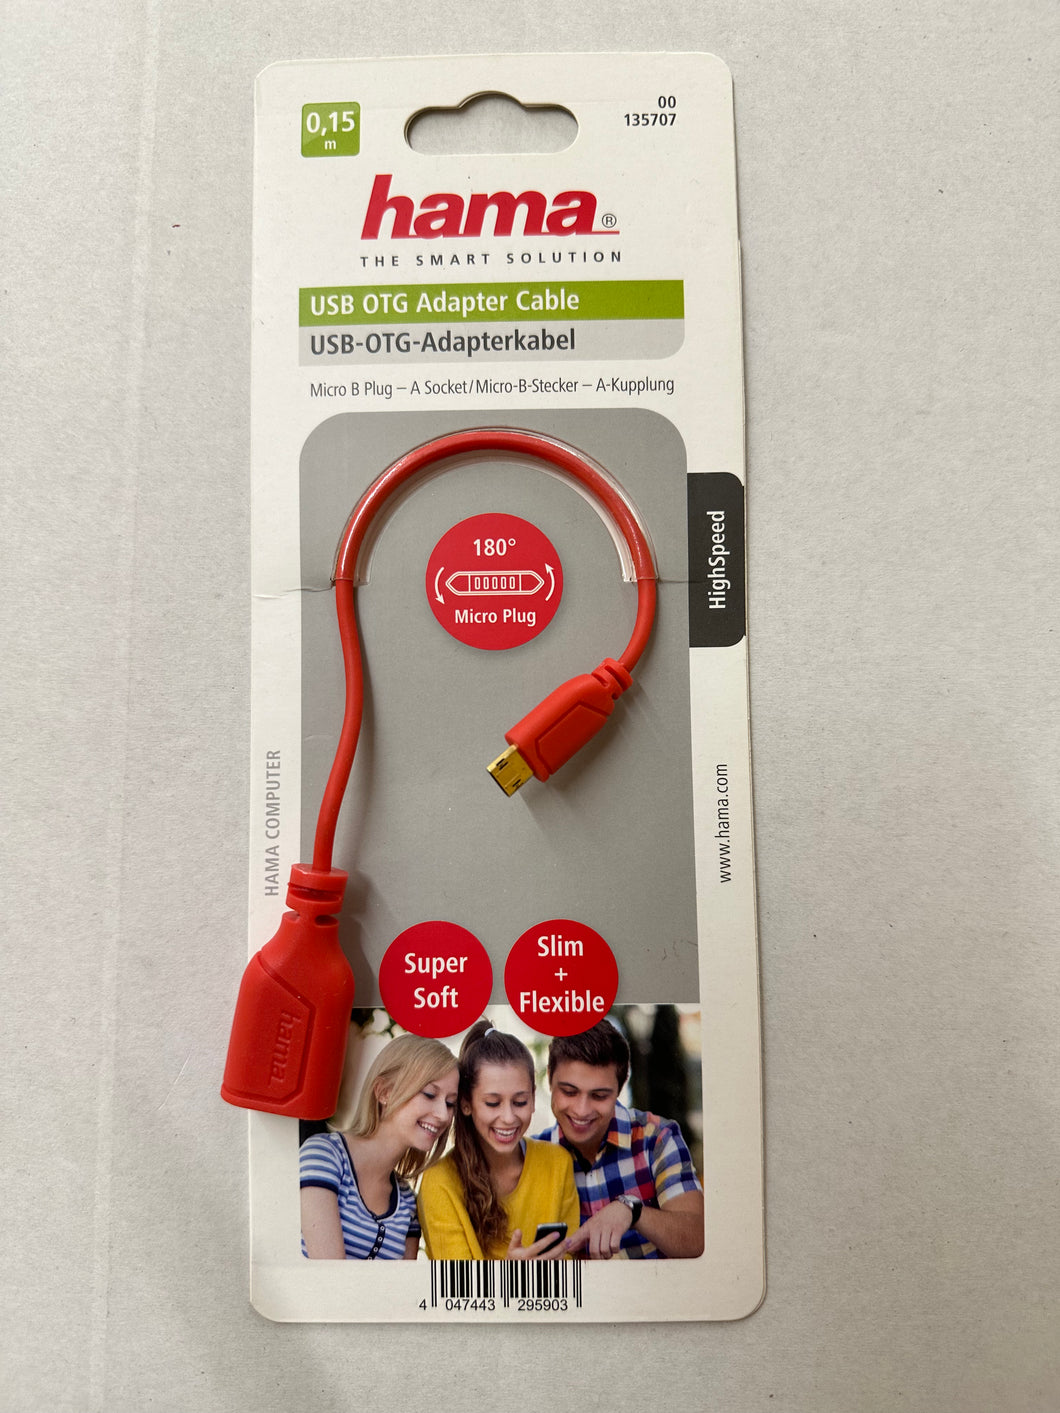 Hama 00135707 Micro-USB-OTG-Adapterkabel 